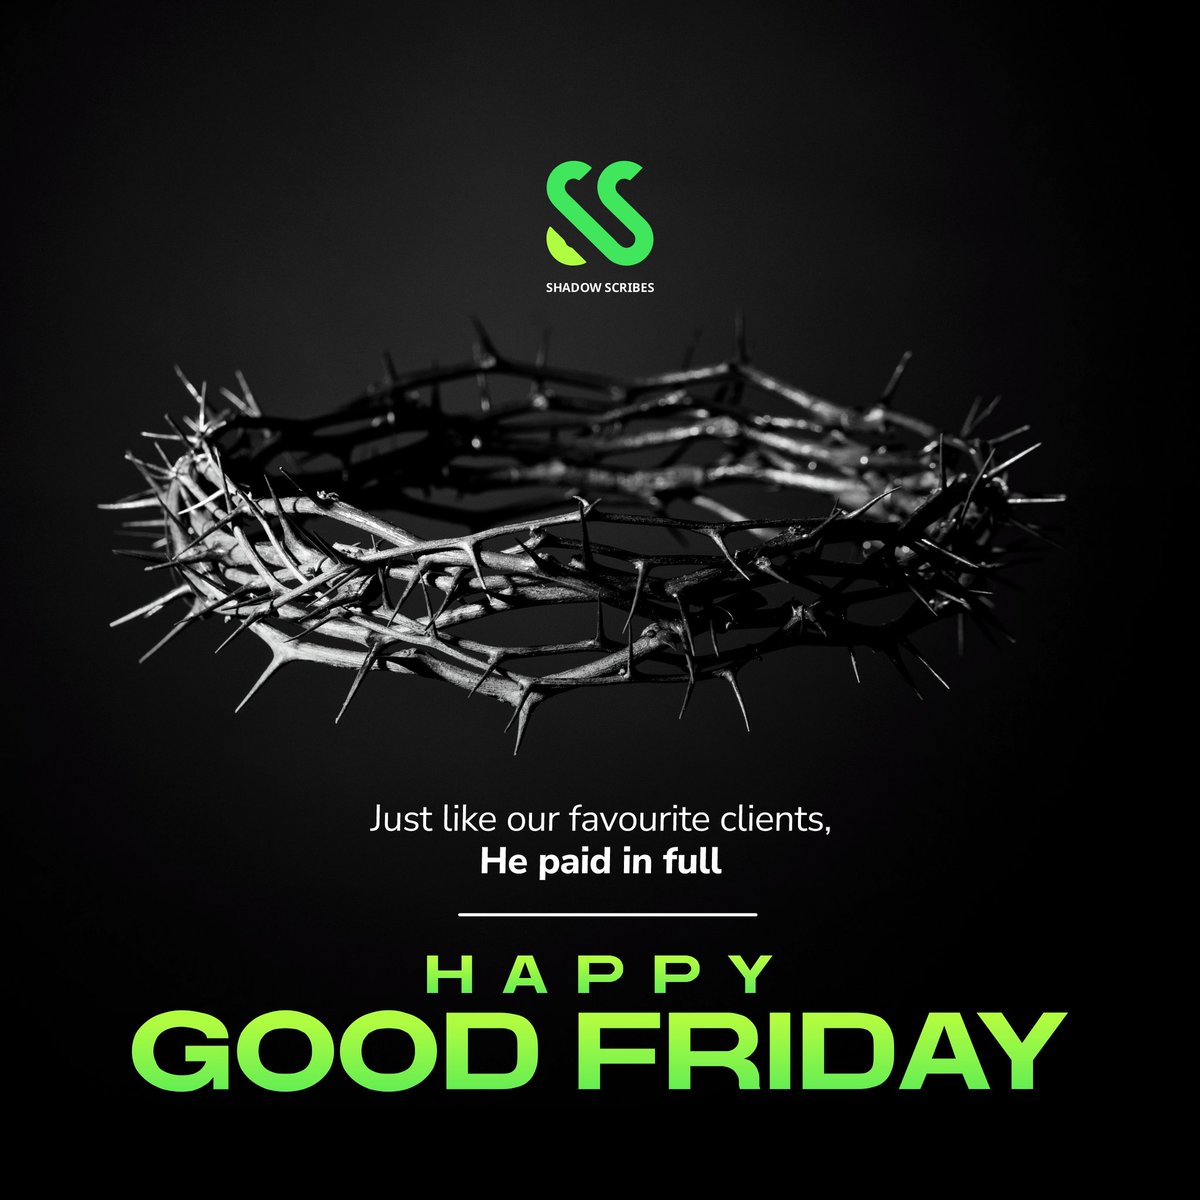 Shadow Scribes wishes you a Happy Good Friday! 🥂

#happygoodfriday
#ShadowScribes
#Marketing
#explorepage
#explore